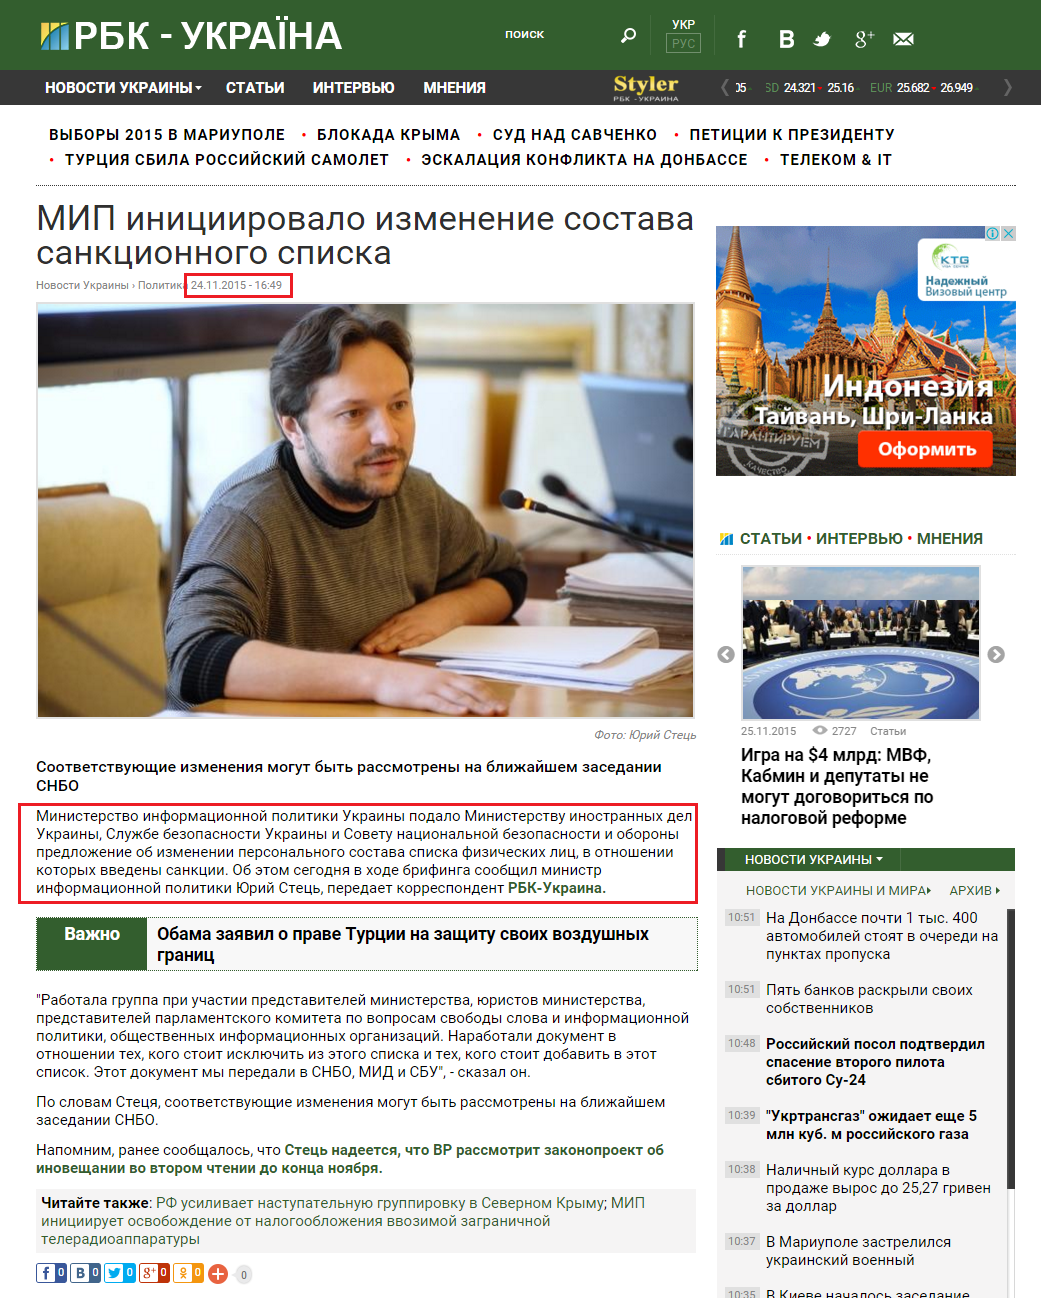 http://www.rbc.ua/rus/news/mip-podalo-mid-sbu-snbo-predlozhenie-izmenenii-1448376542.html